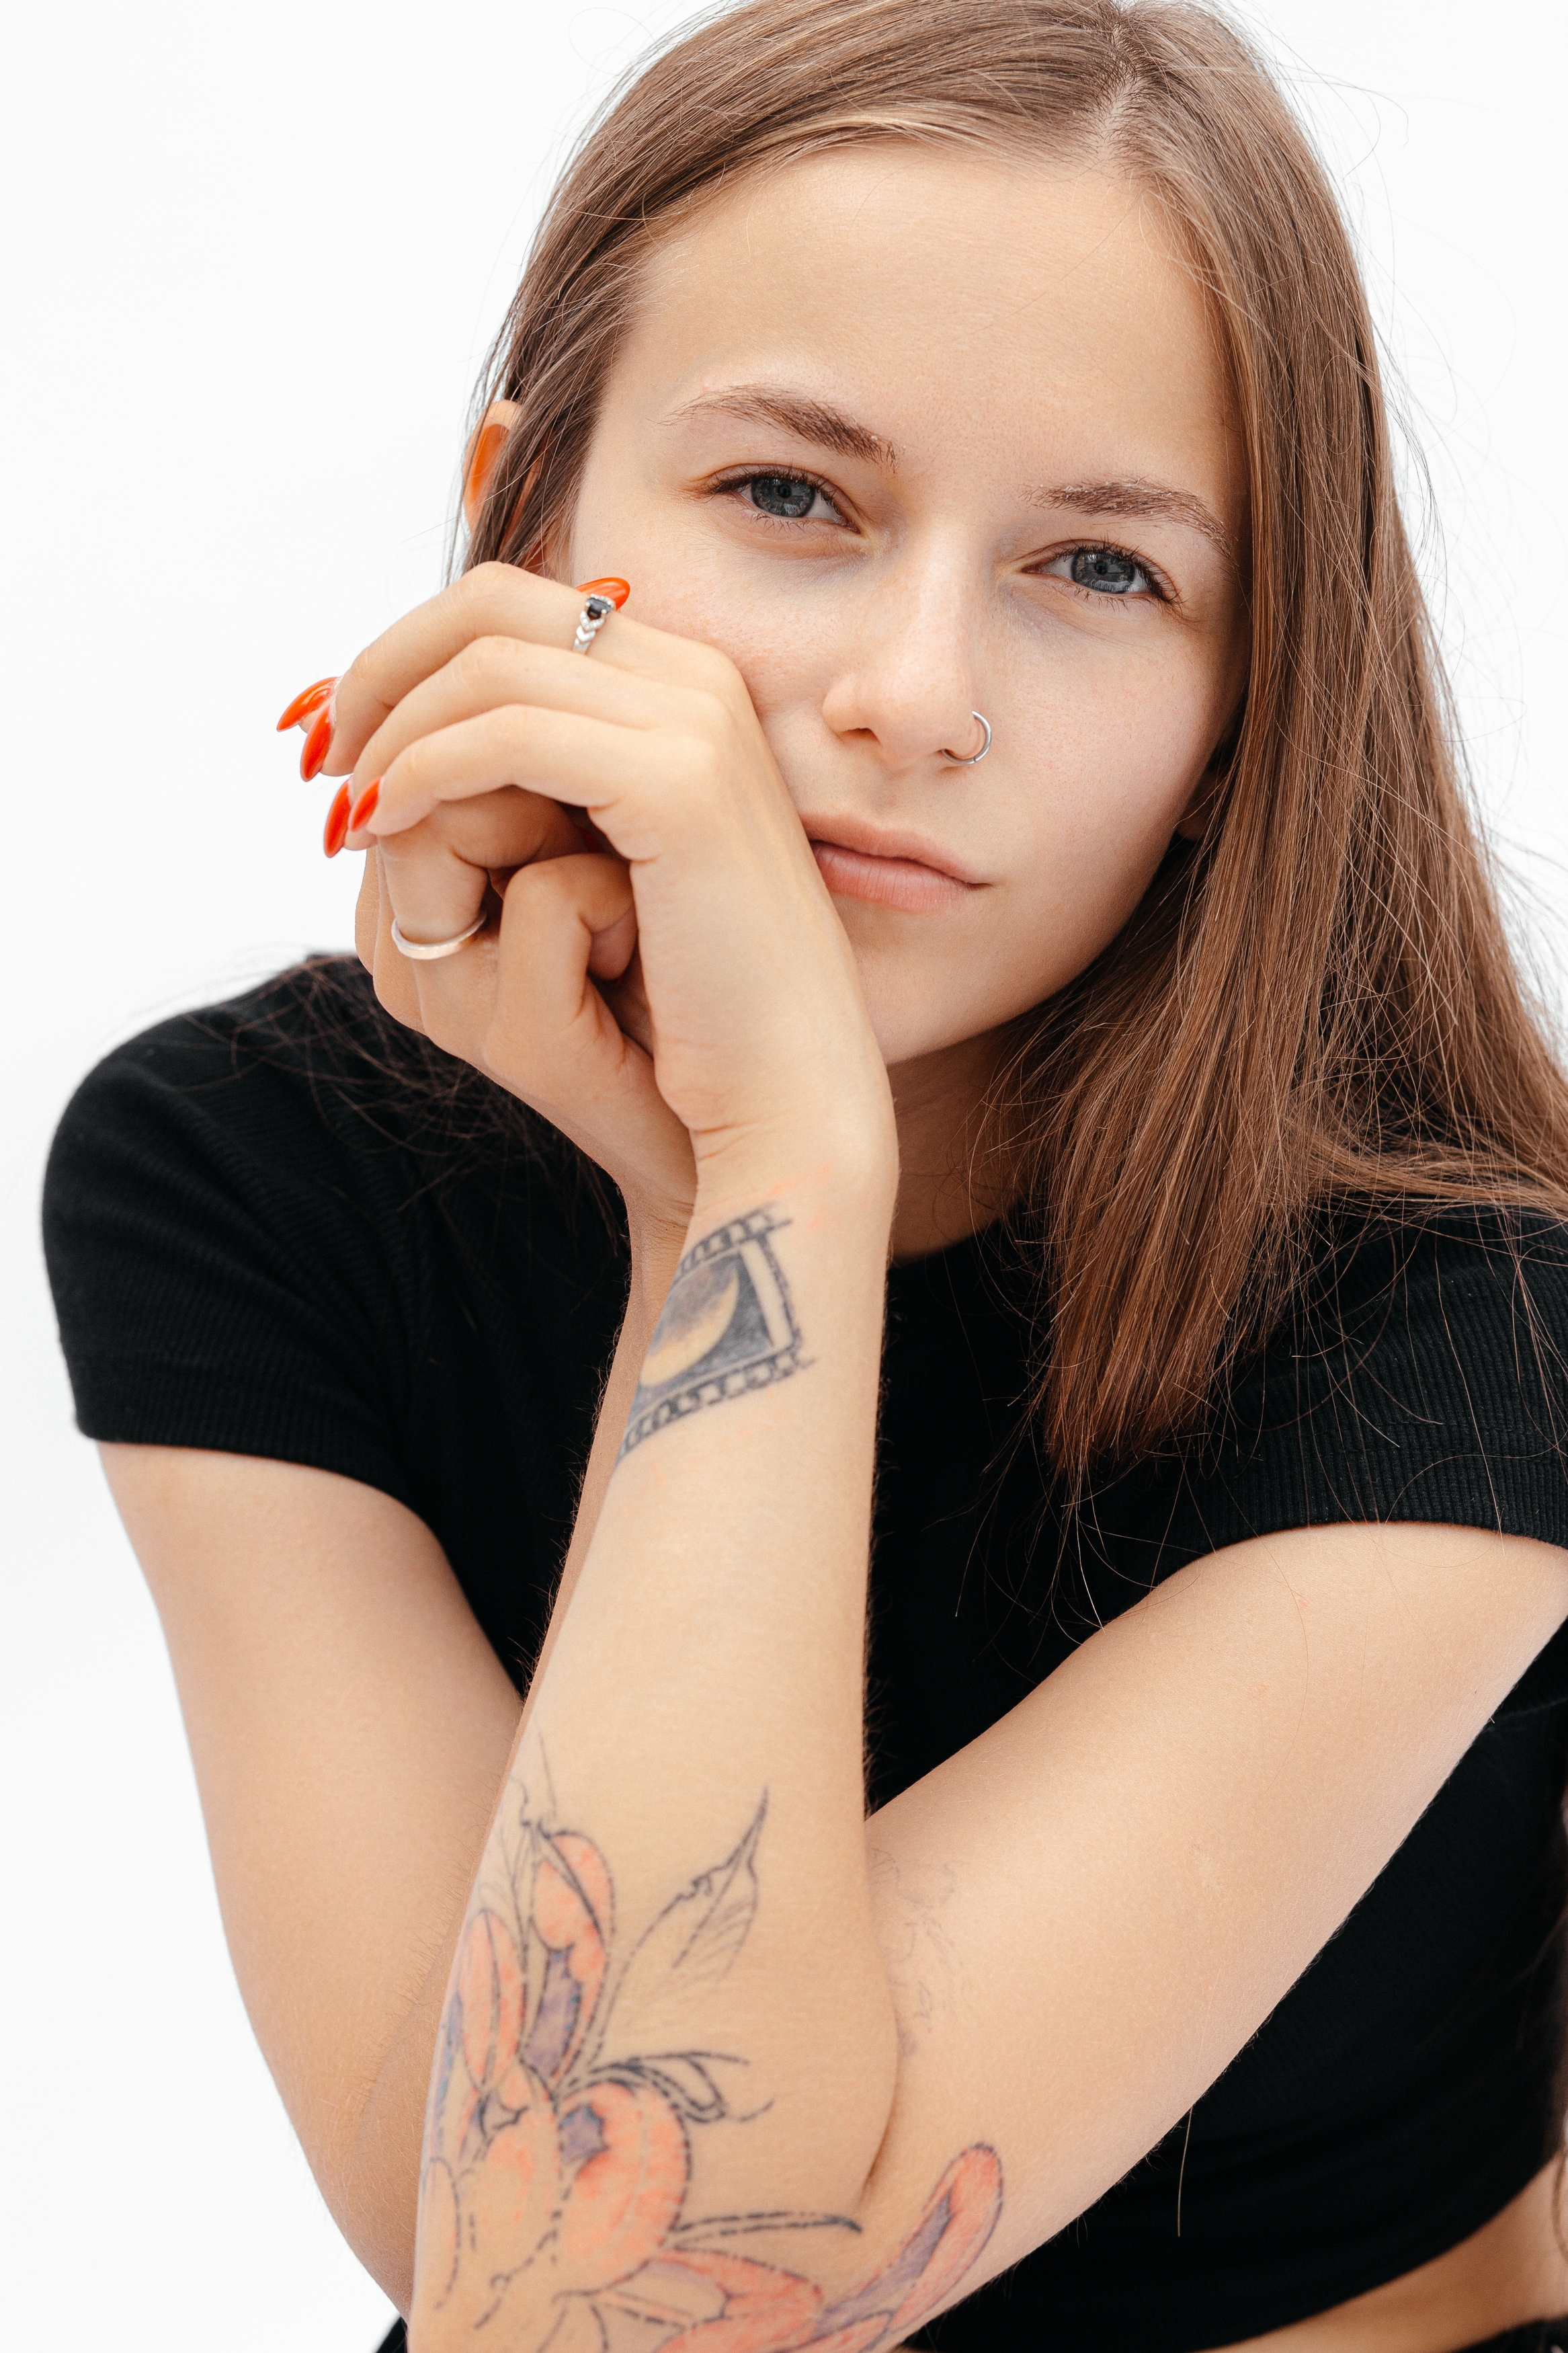 Dmitriy Arabadzhi Women Painted Nails Tattoo Piercing Portrait T Shirt Black Top Nose Ring 2333x3500